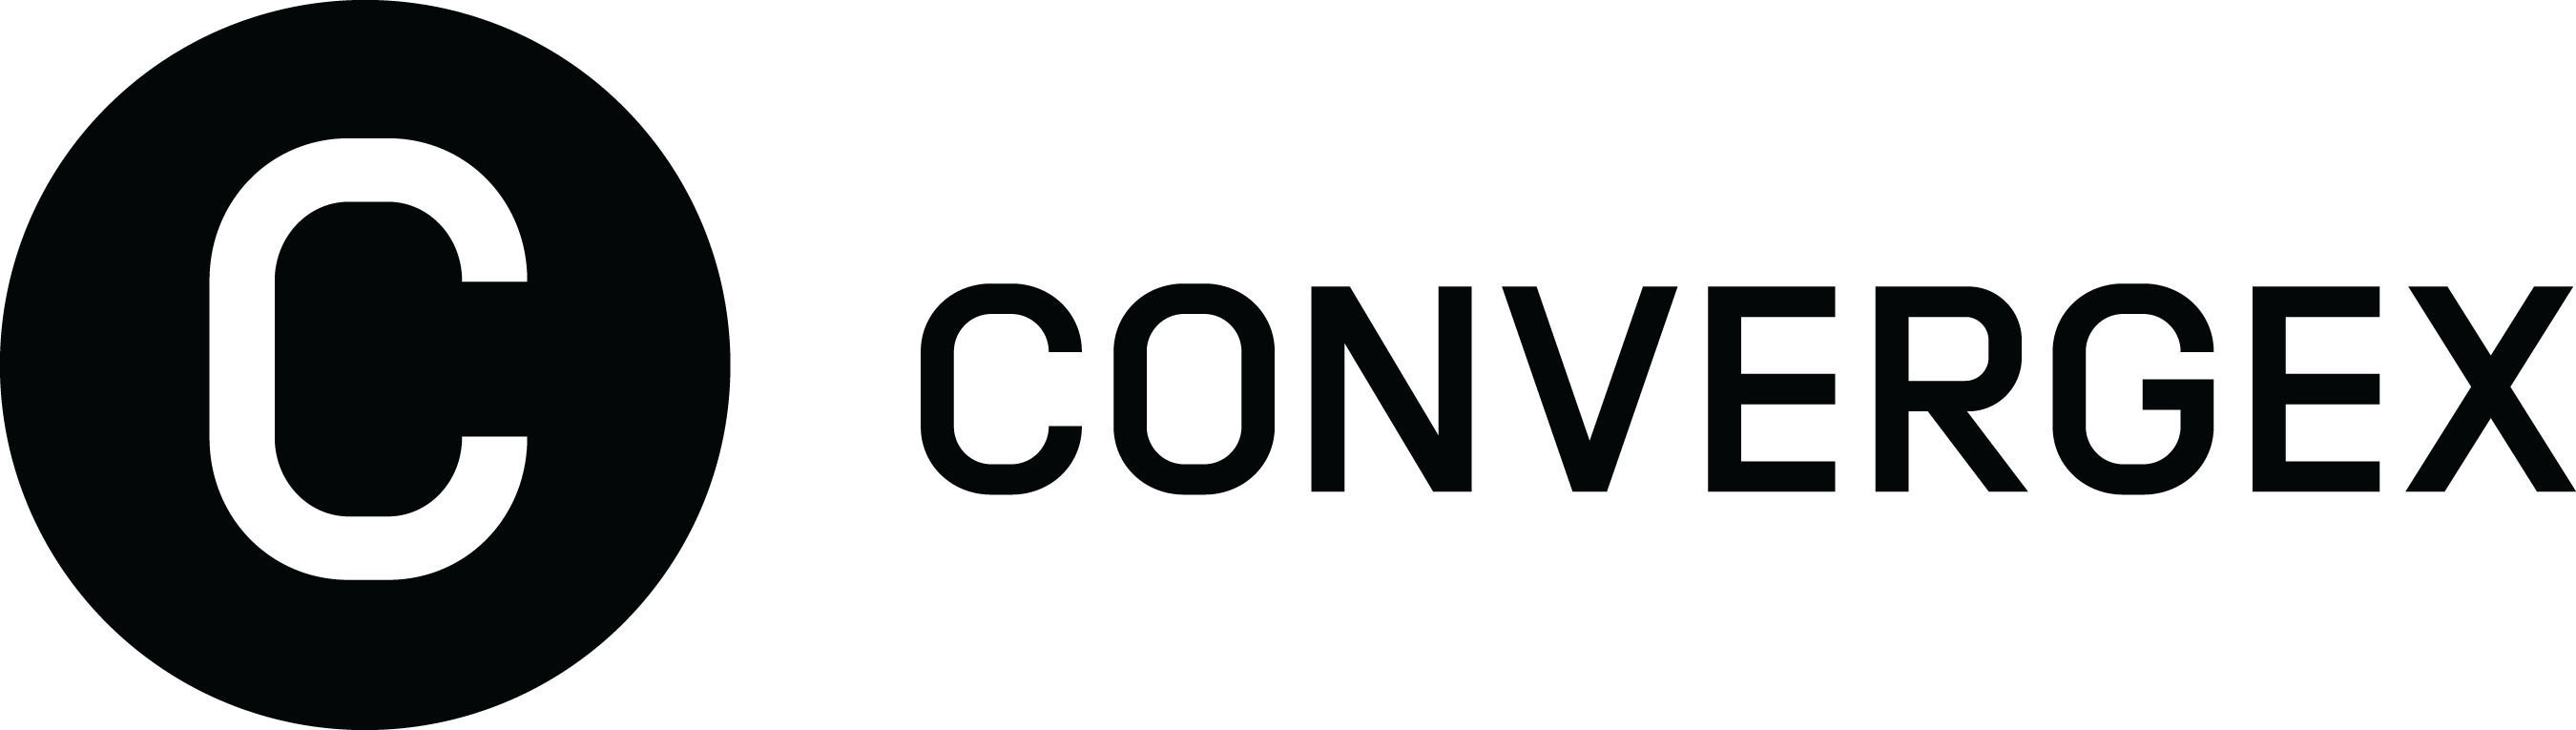 Convergex logo